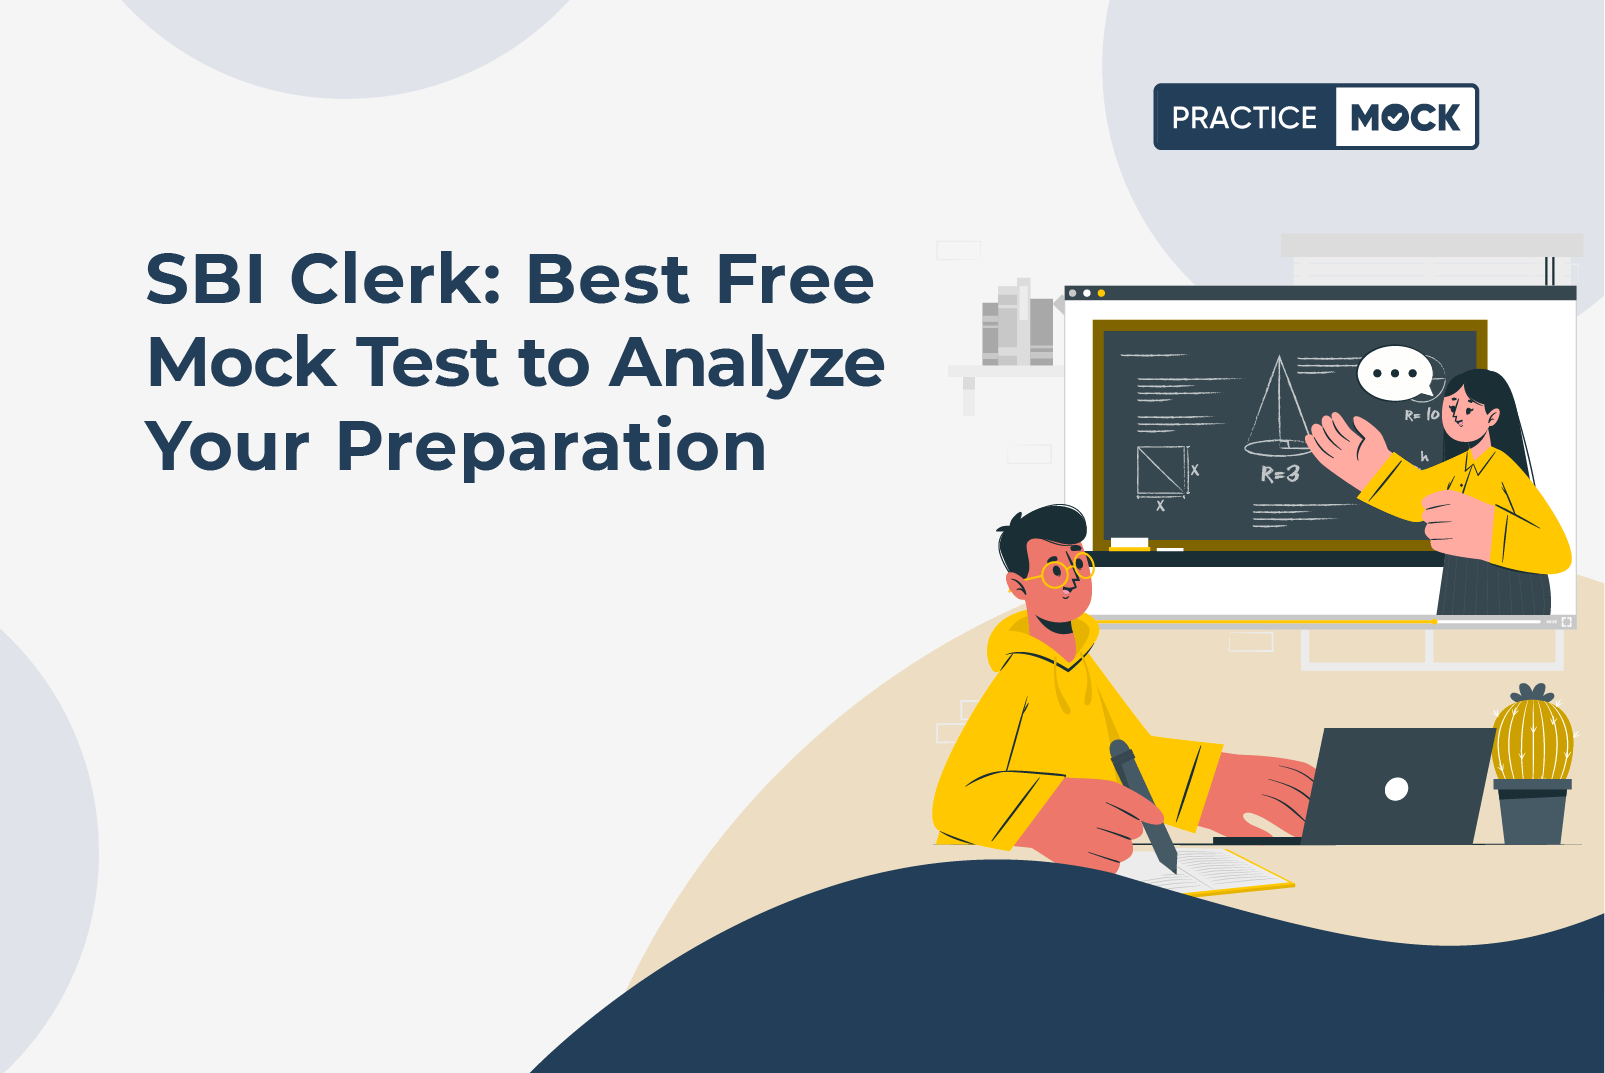 SBI Clerk Best Free Mock Test to Analyze Your Preparation